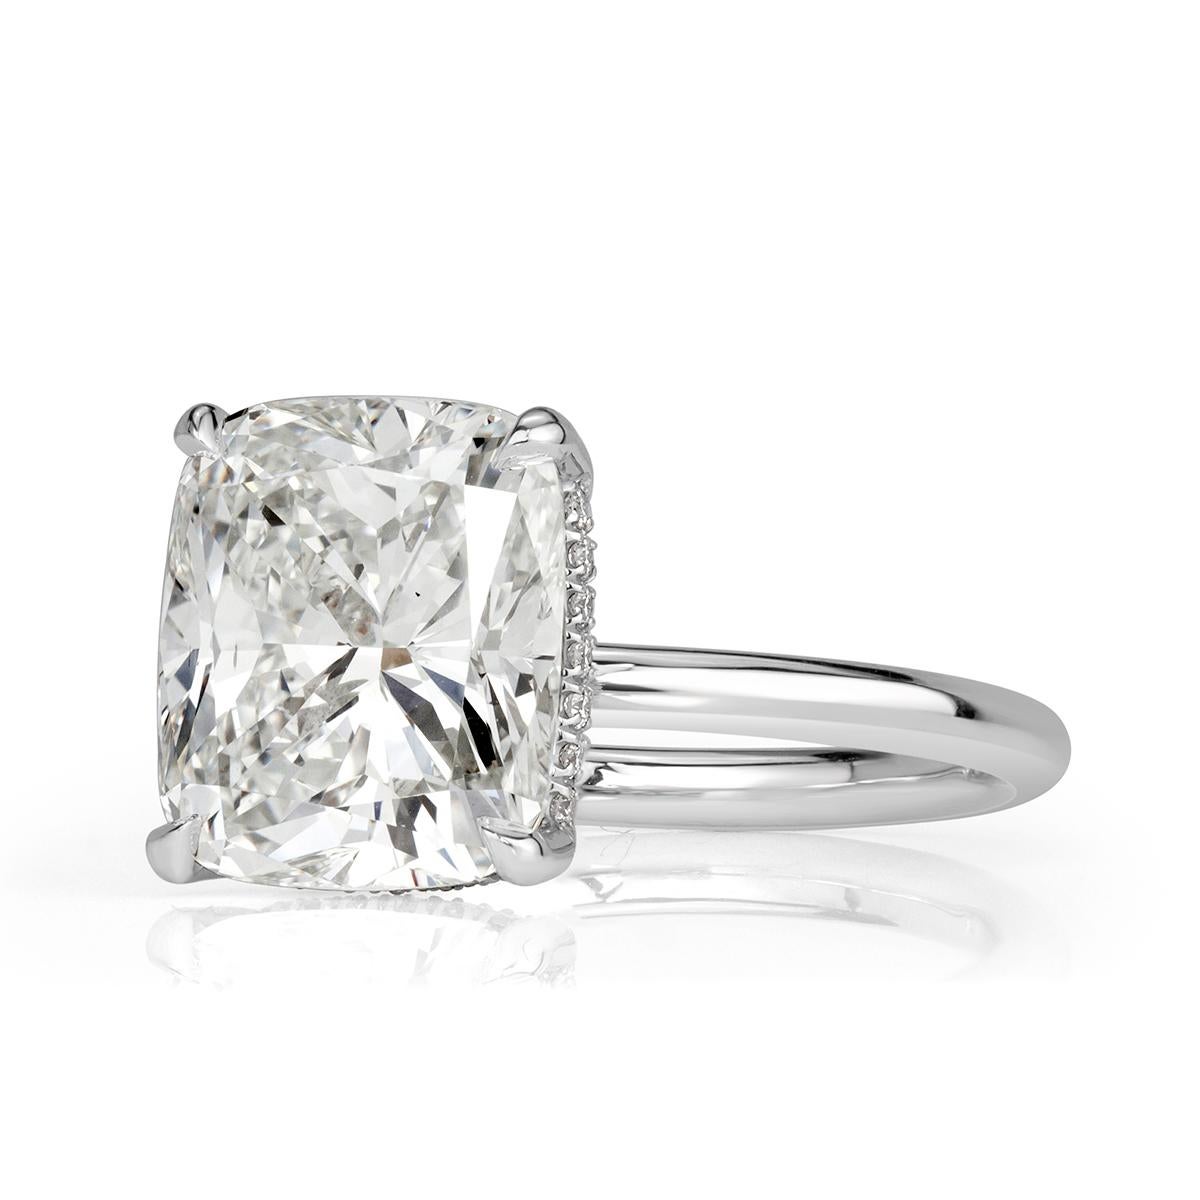 Women's or Men's Mark Broumand 5.12 Carat Cushion Cut Diamond Engagement Ring